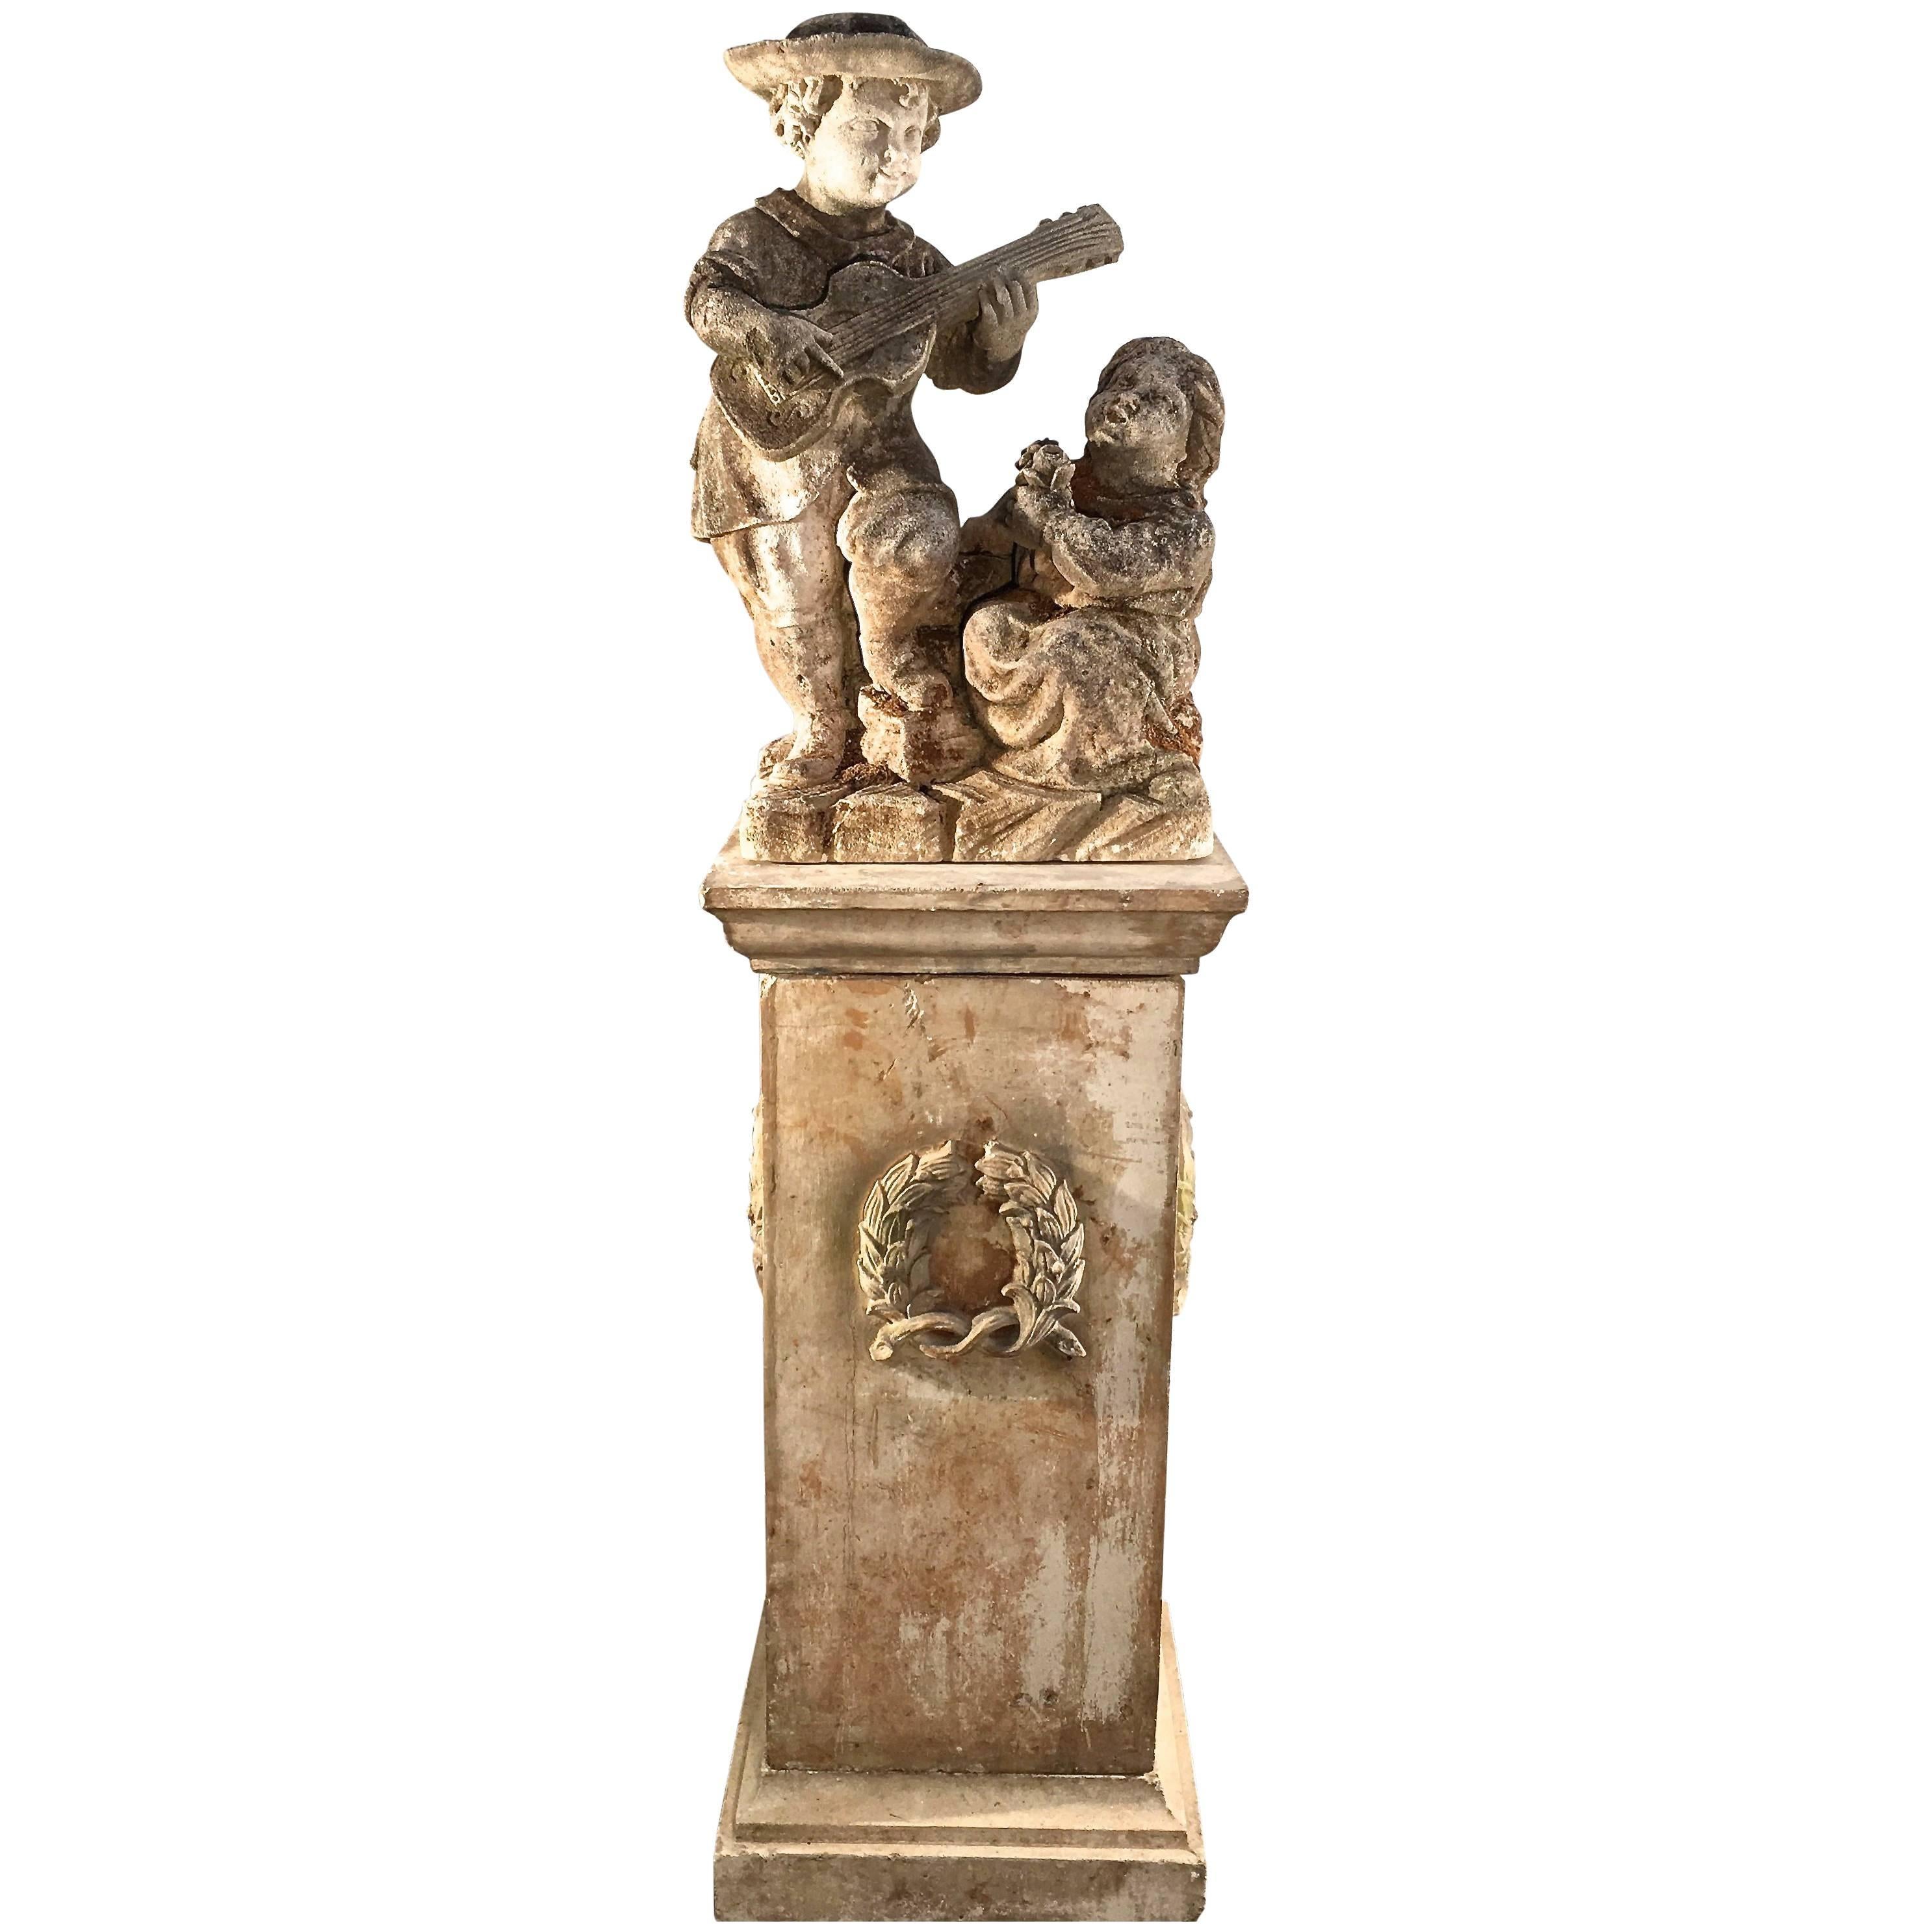 19th Century Hand-Carved Limestone Statue of Children